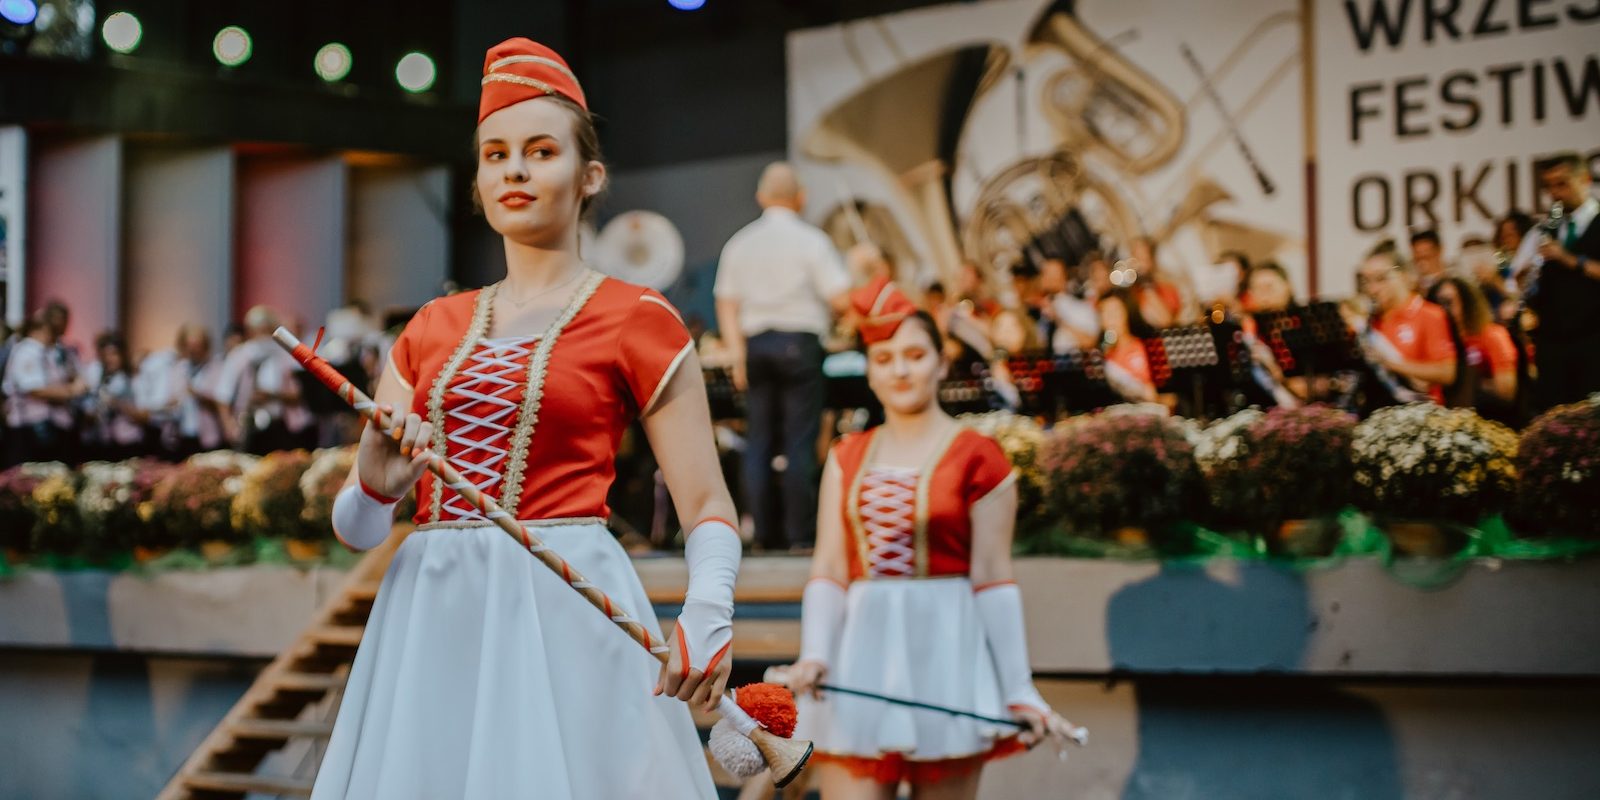 Festiwal orkiestr we Wrześni 2019